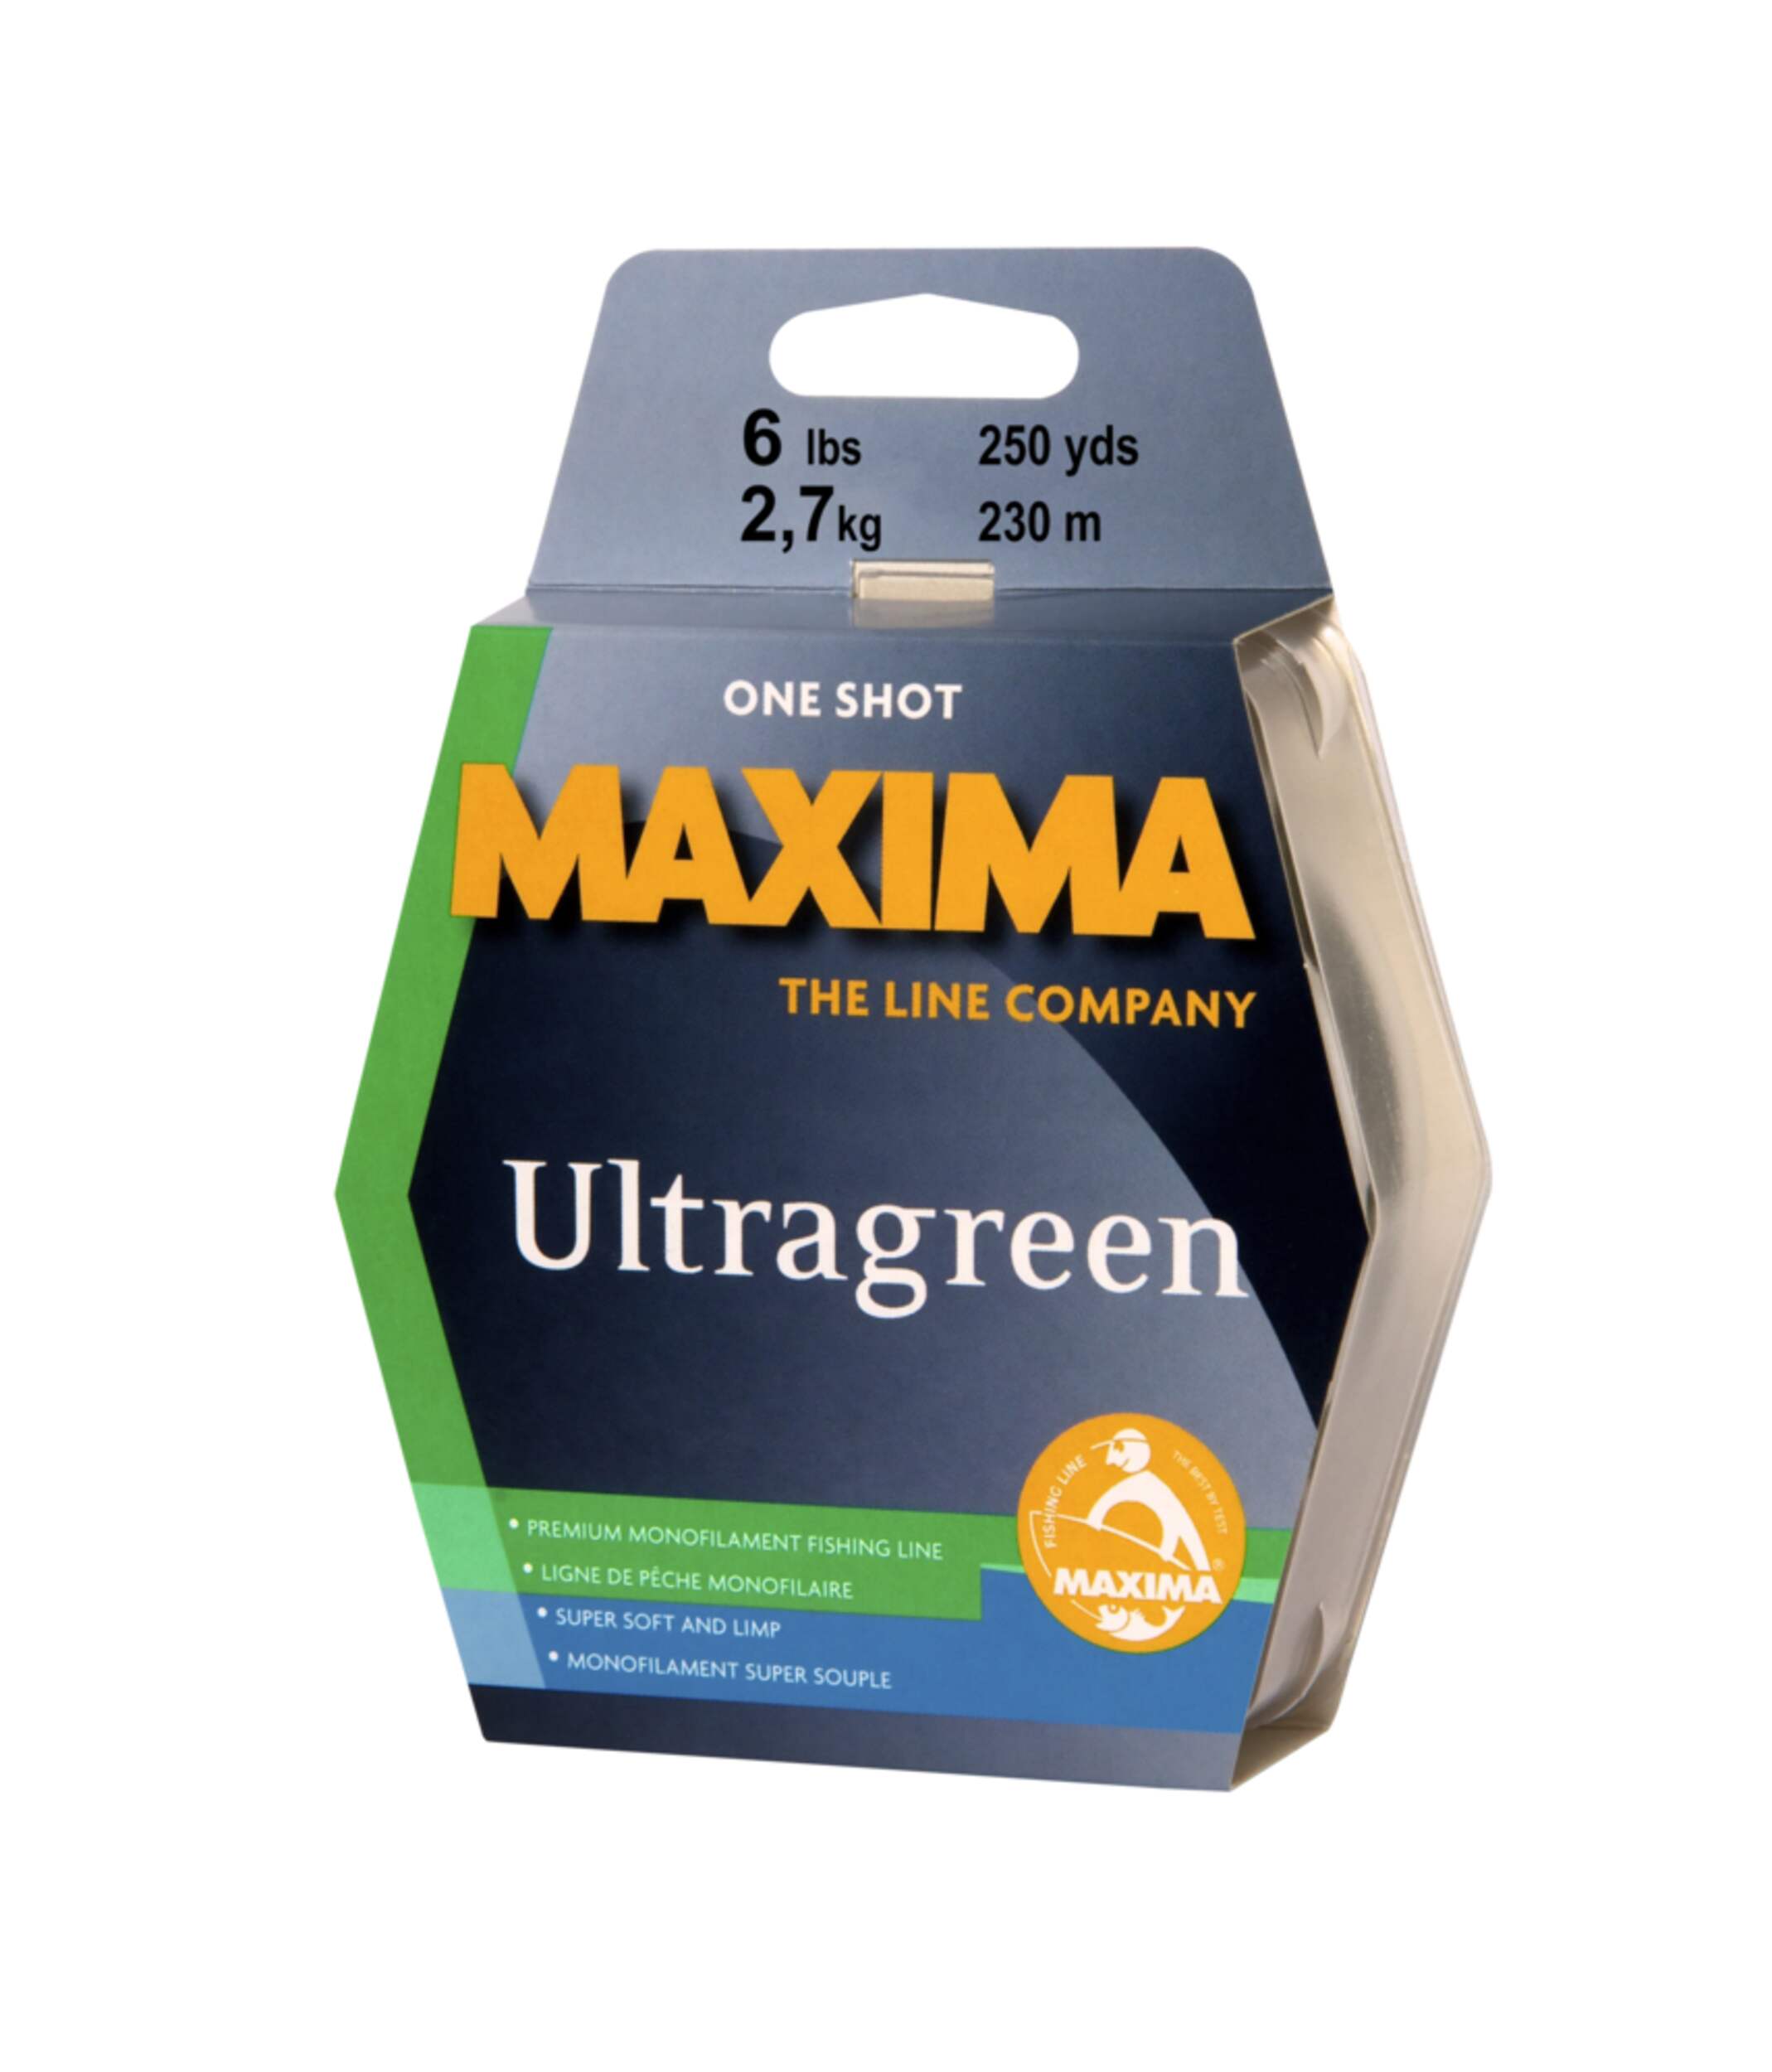 Maxima® One Shot Ultragreen Monofilament Fishing Line